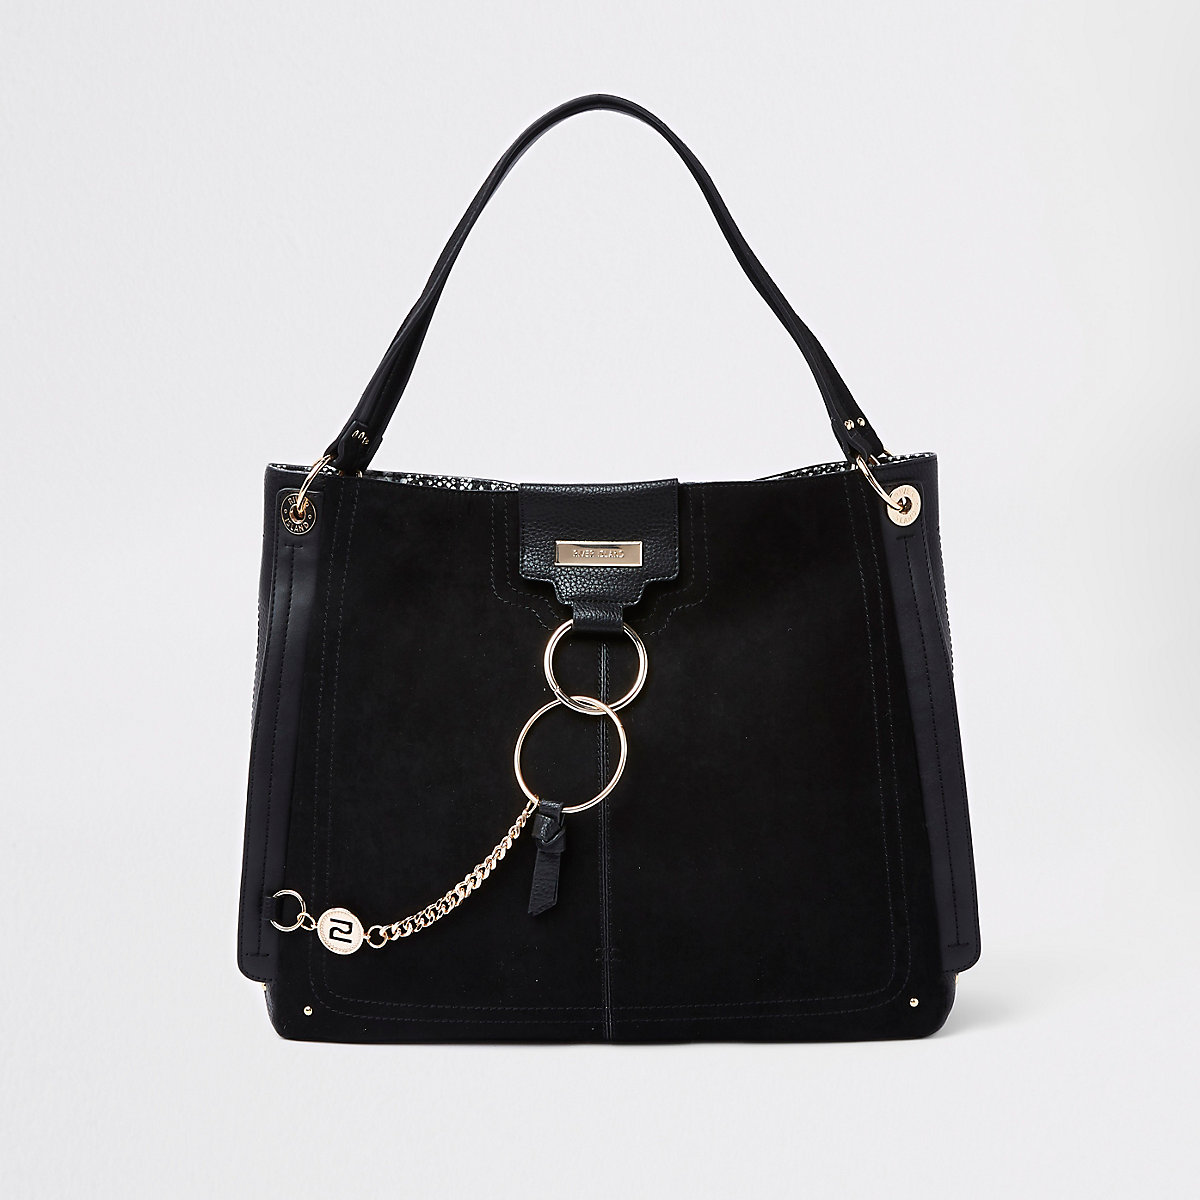 Black oversized ring front slouch bag - Shoulder Bags - Bags & Purses ...